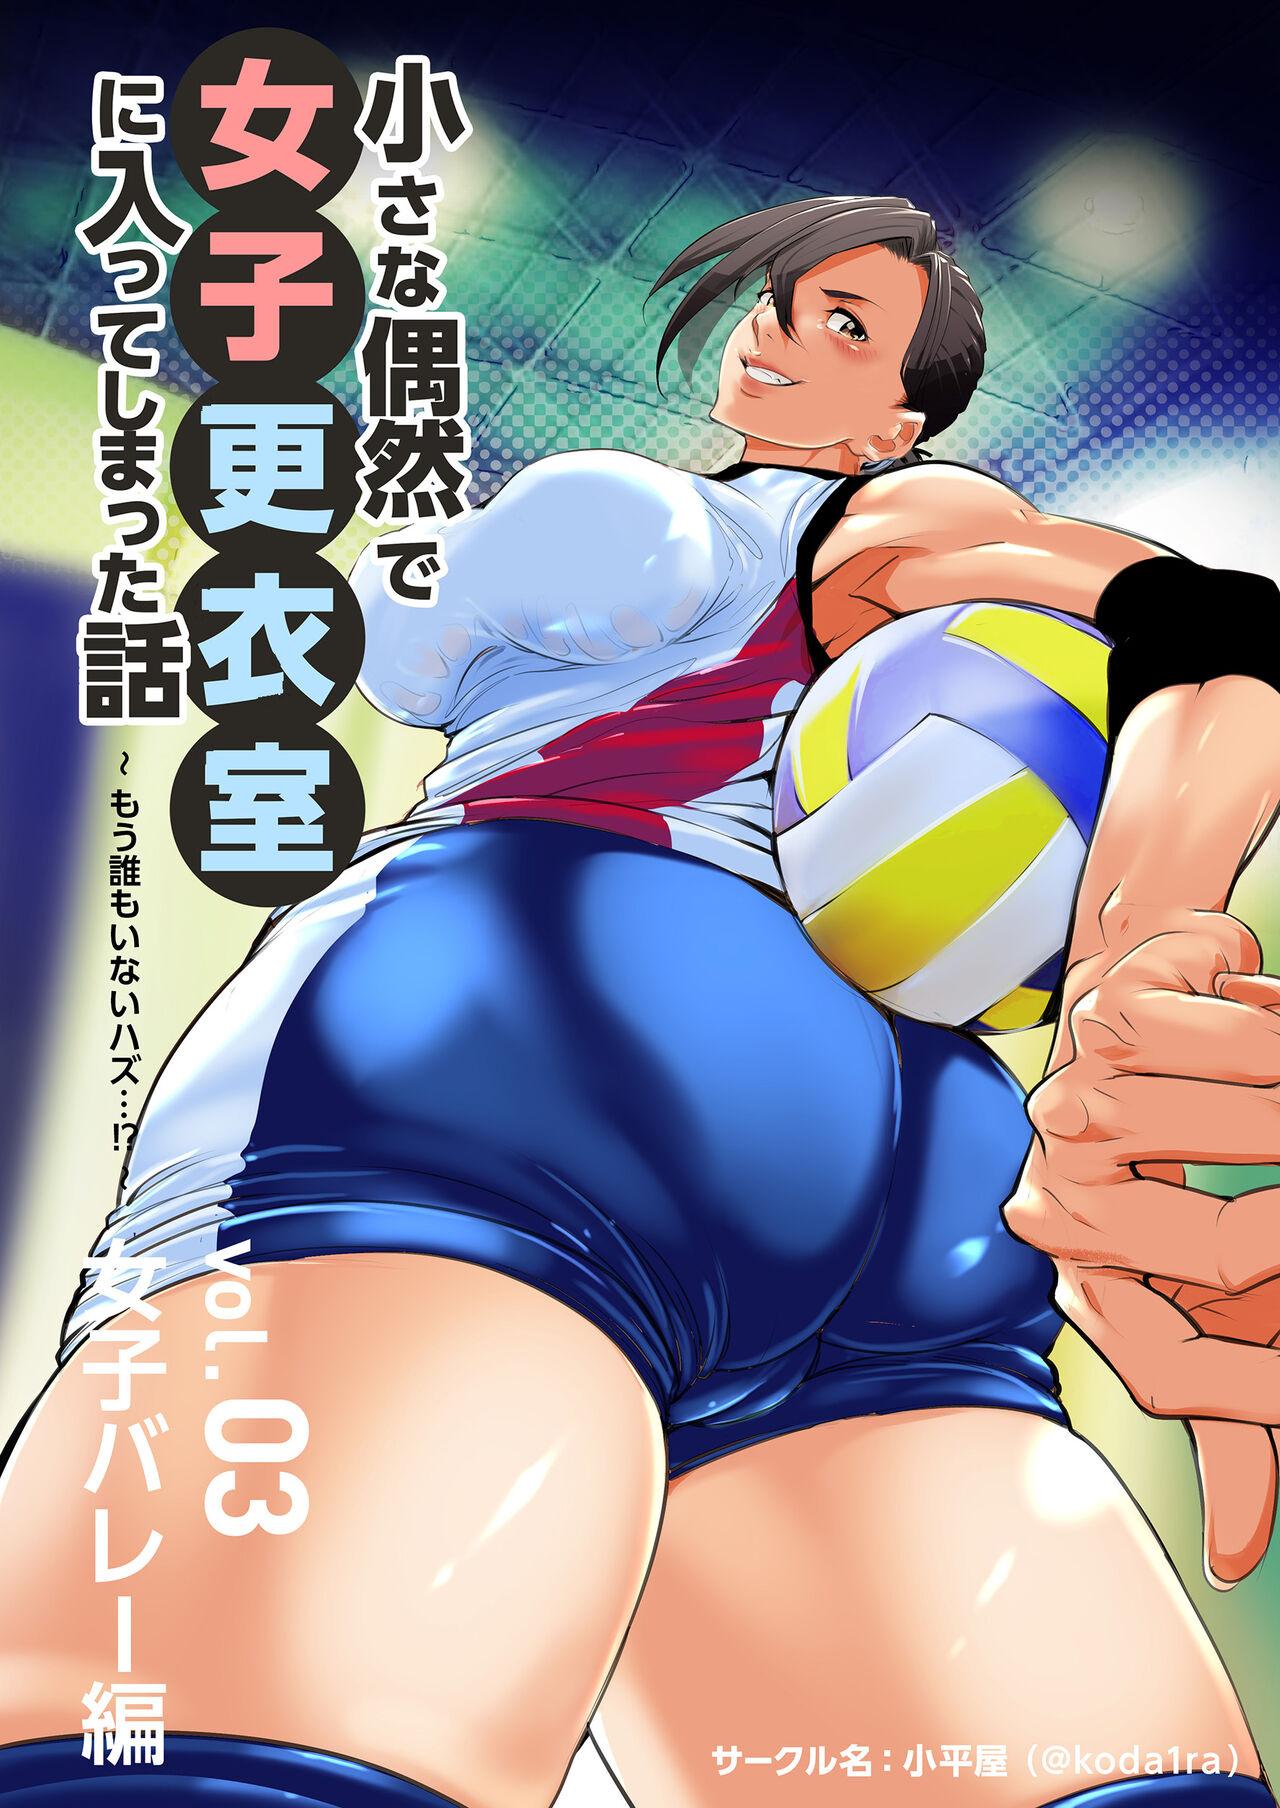 [Koda1ra] Lucky Happening - Women's Volleyball - Vol 3 0